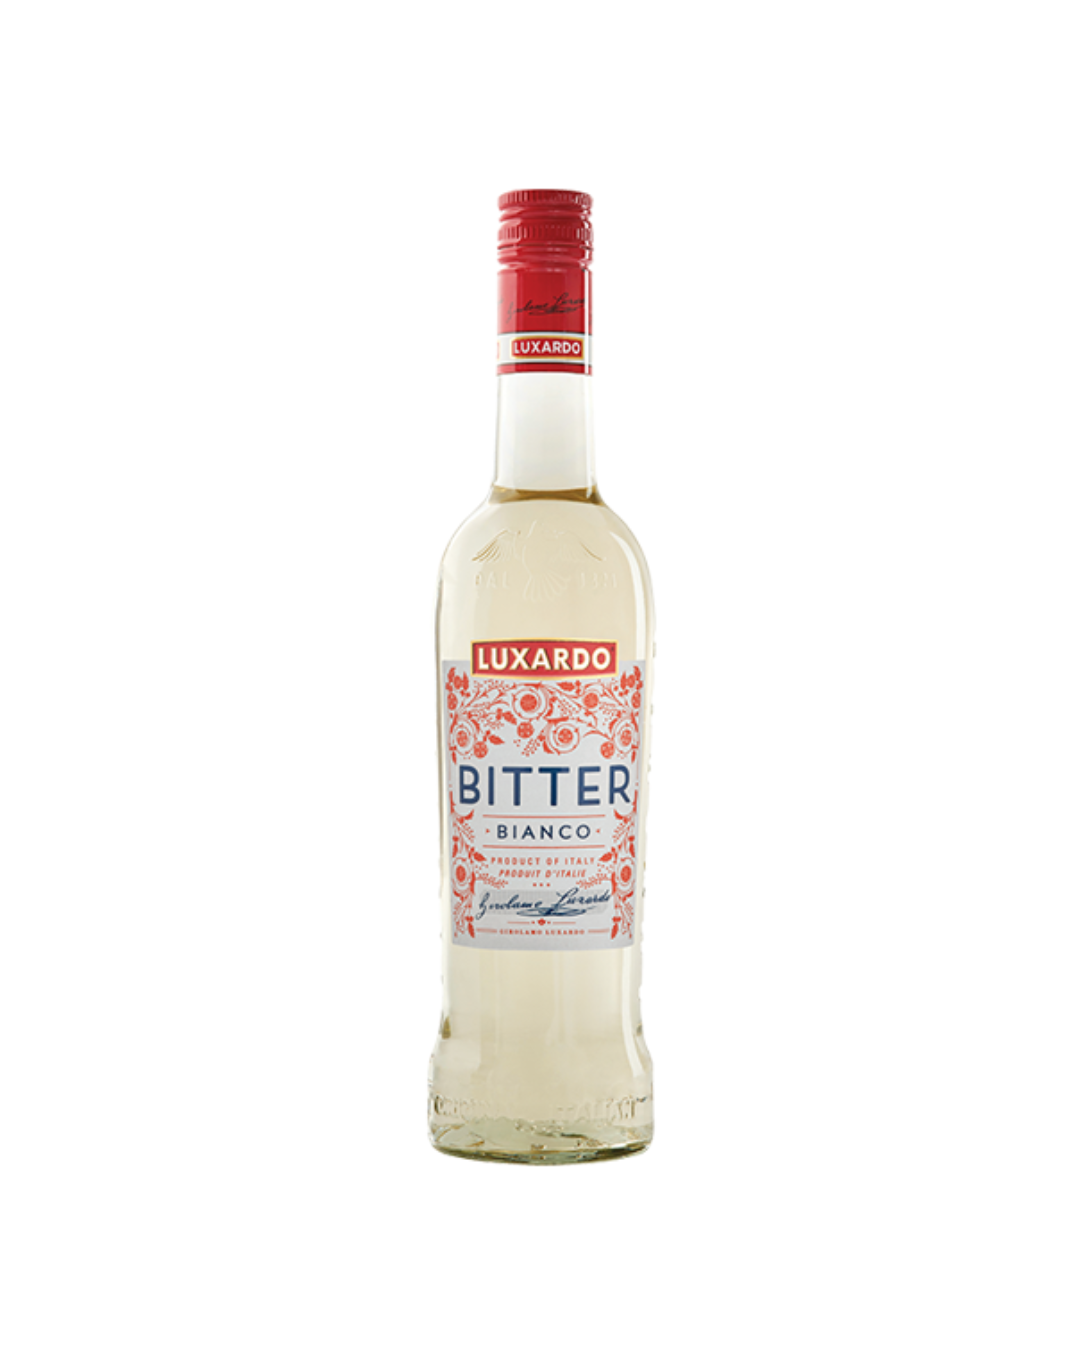 Bitter Bianco 30% Vol 70cl - Luxardo